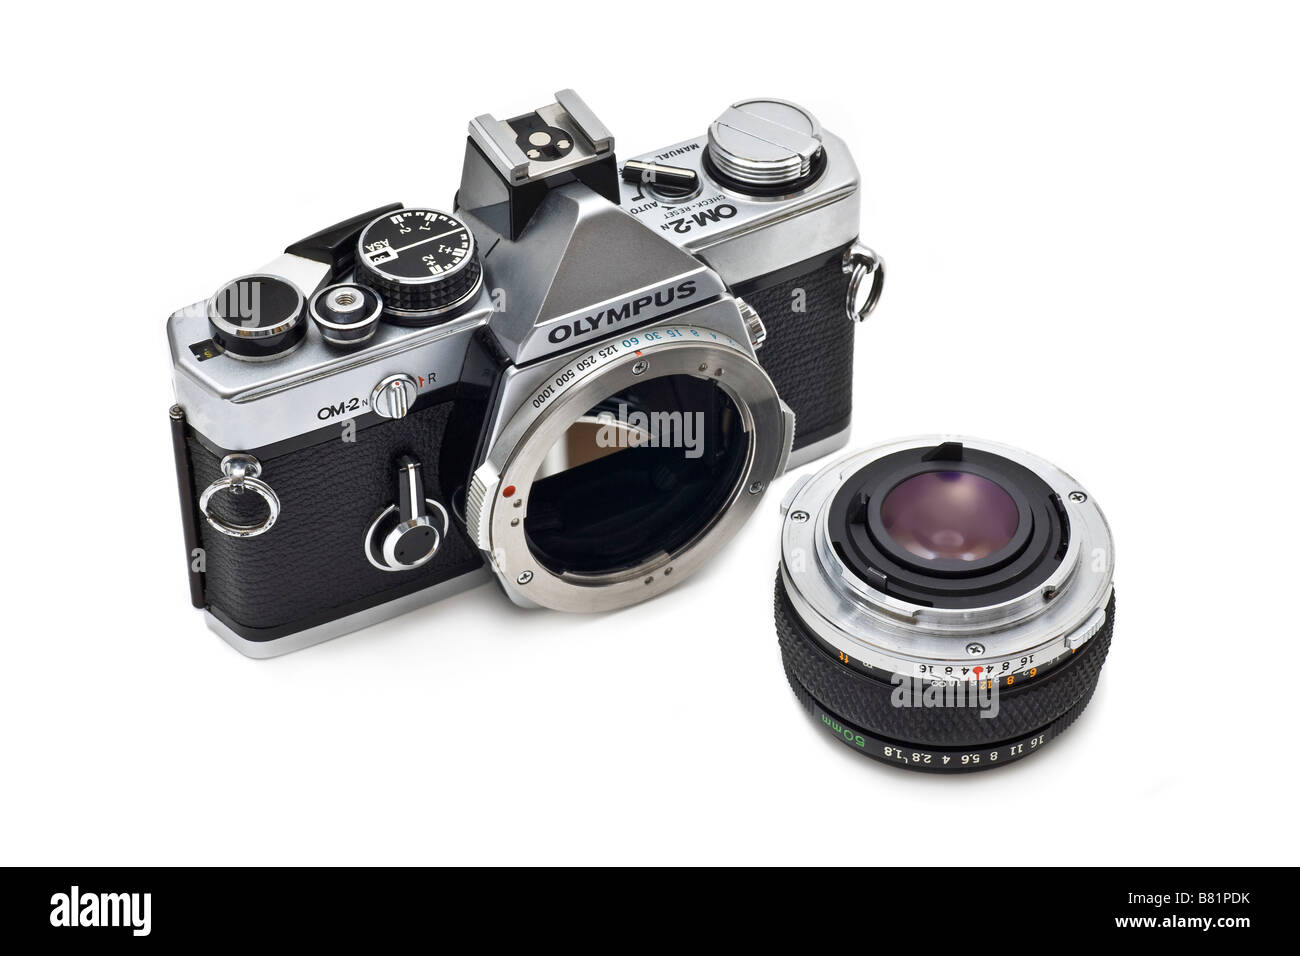 Olympus OM2 35mm sinle lens reflex camera showing interchangeable lens flange bayonet mount Stock Photo